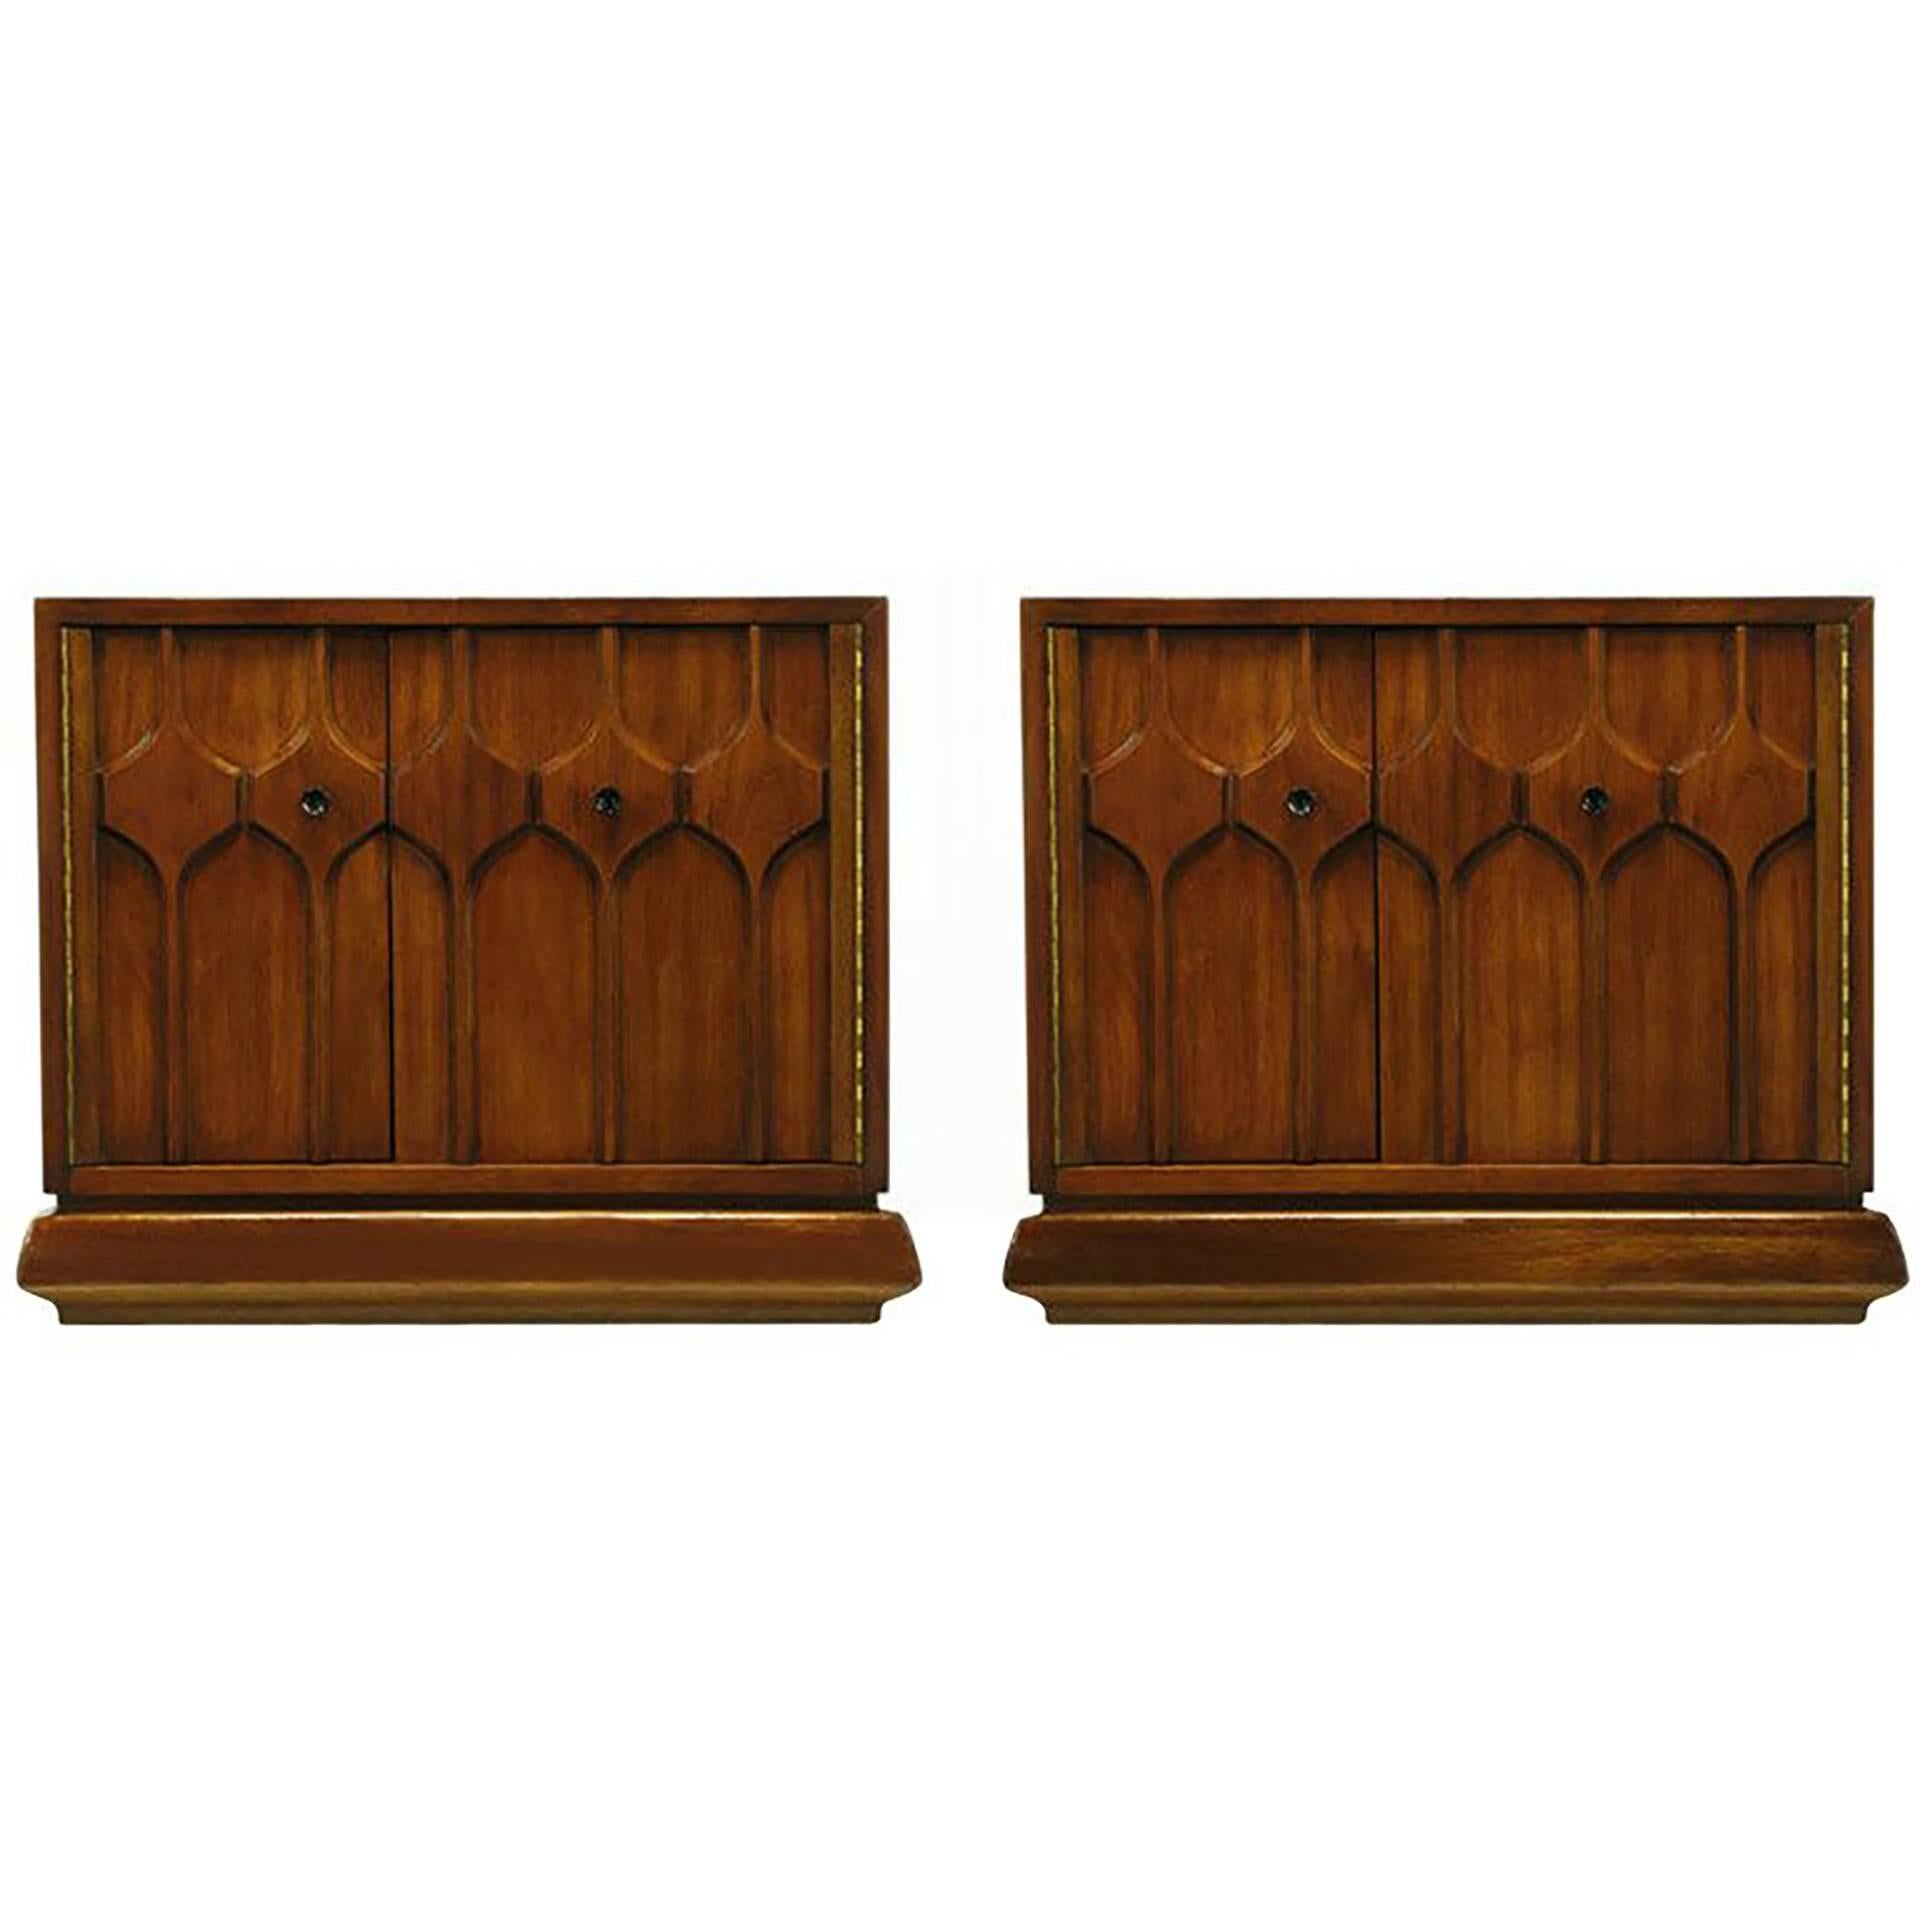 Pair of Walnut Nightstands with Carved Relief Doors